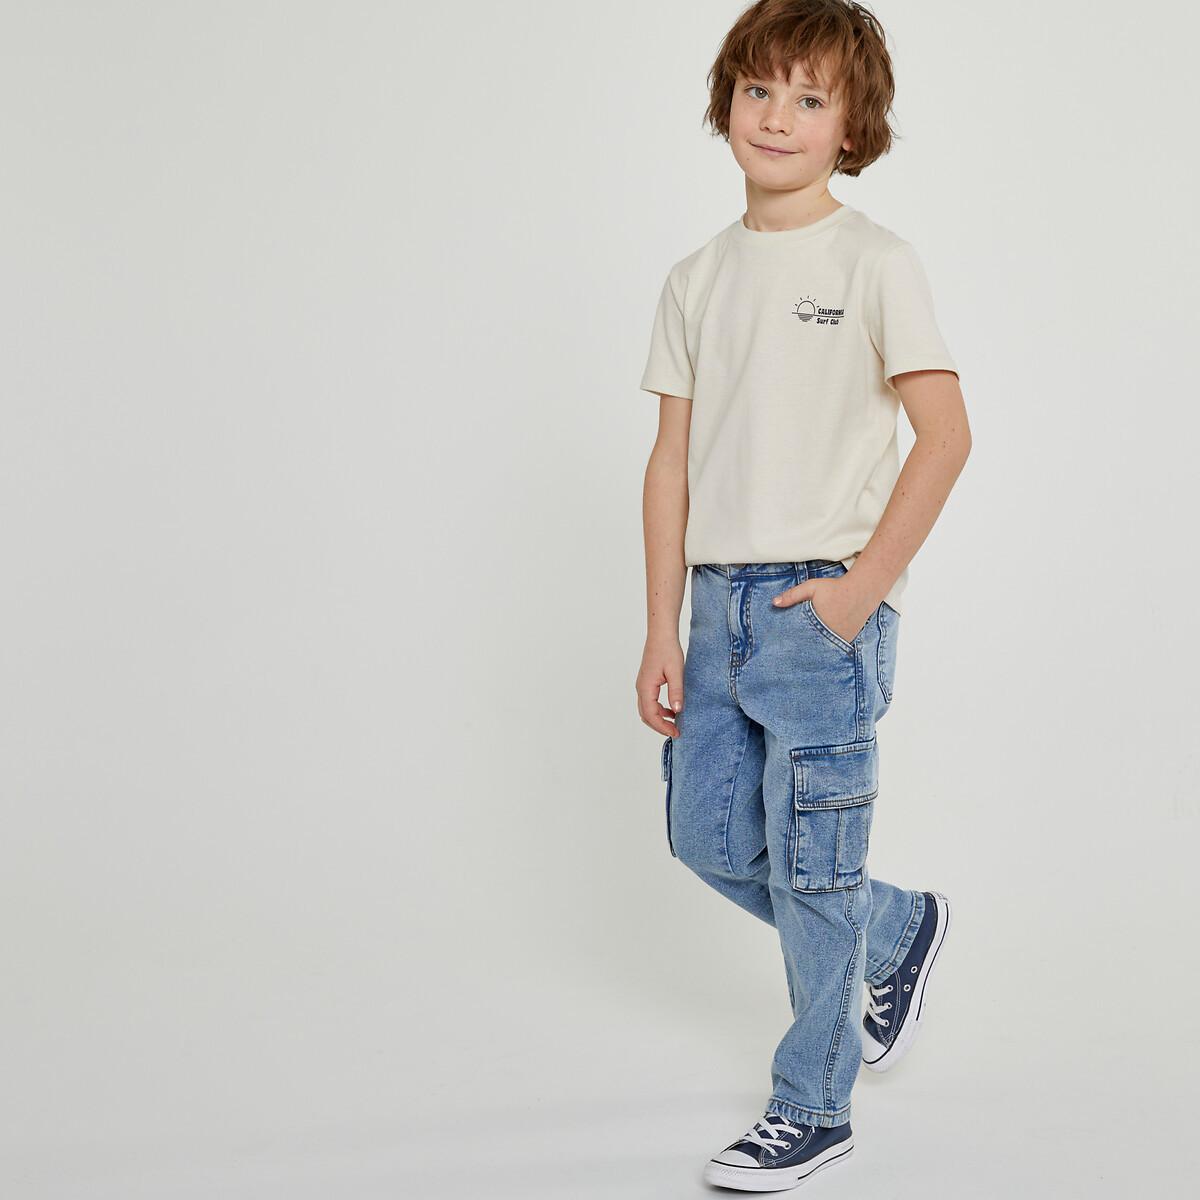 Worker-jeans Jungen Blau 3A von La Redoute Collections